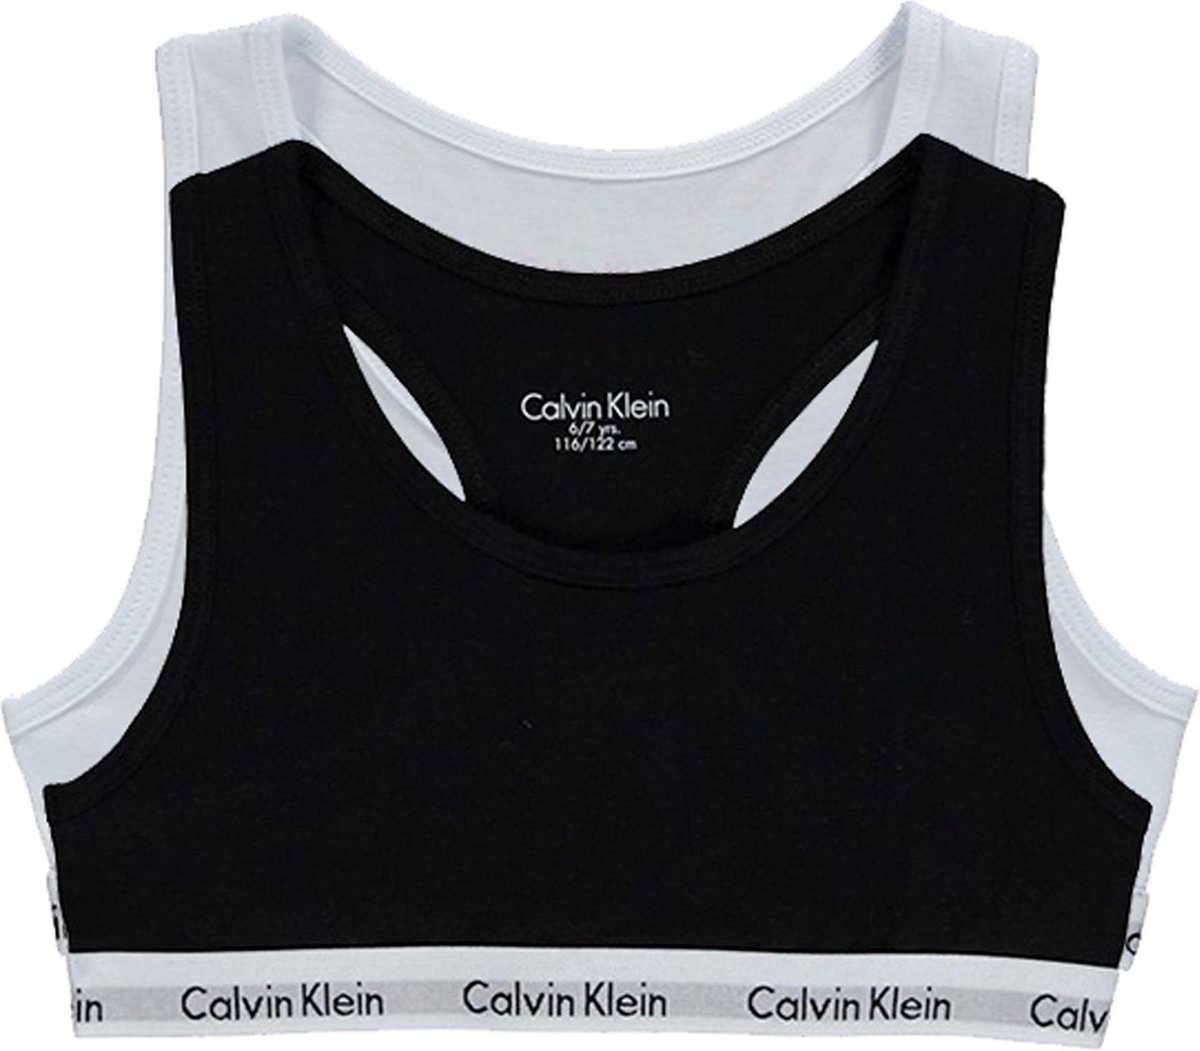 Calvin Klein Topje - Maat 164/170 - Meisjes - zwart/ wit | bol.com